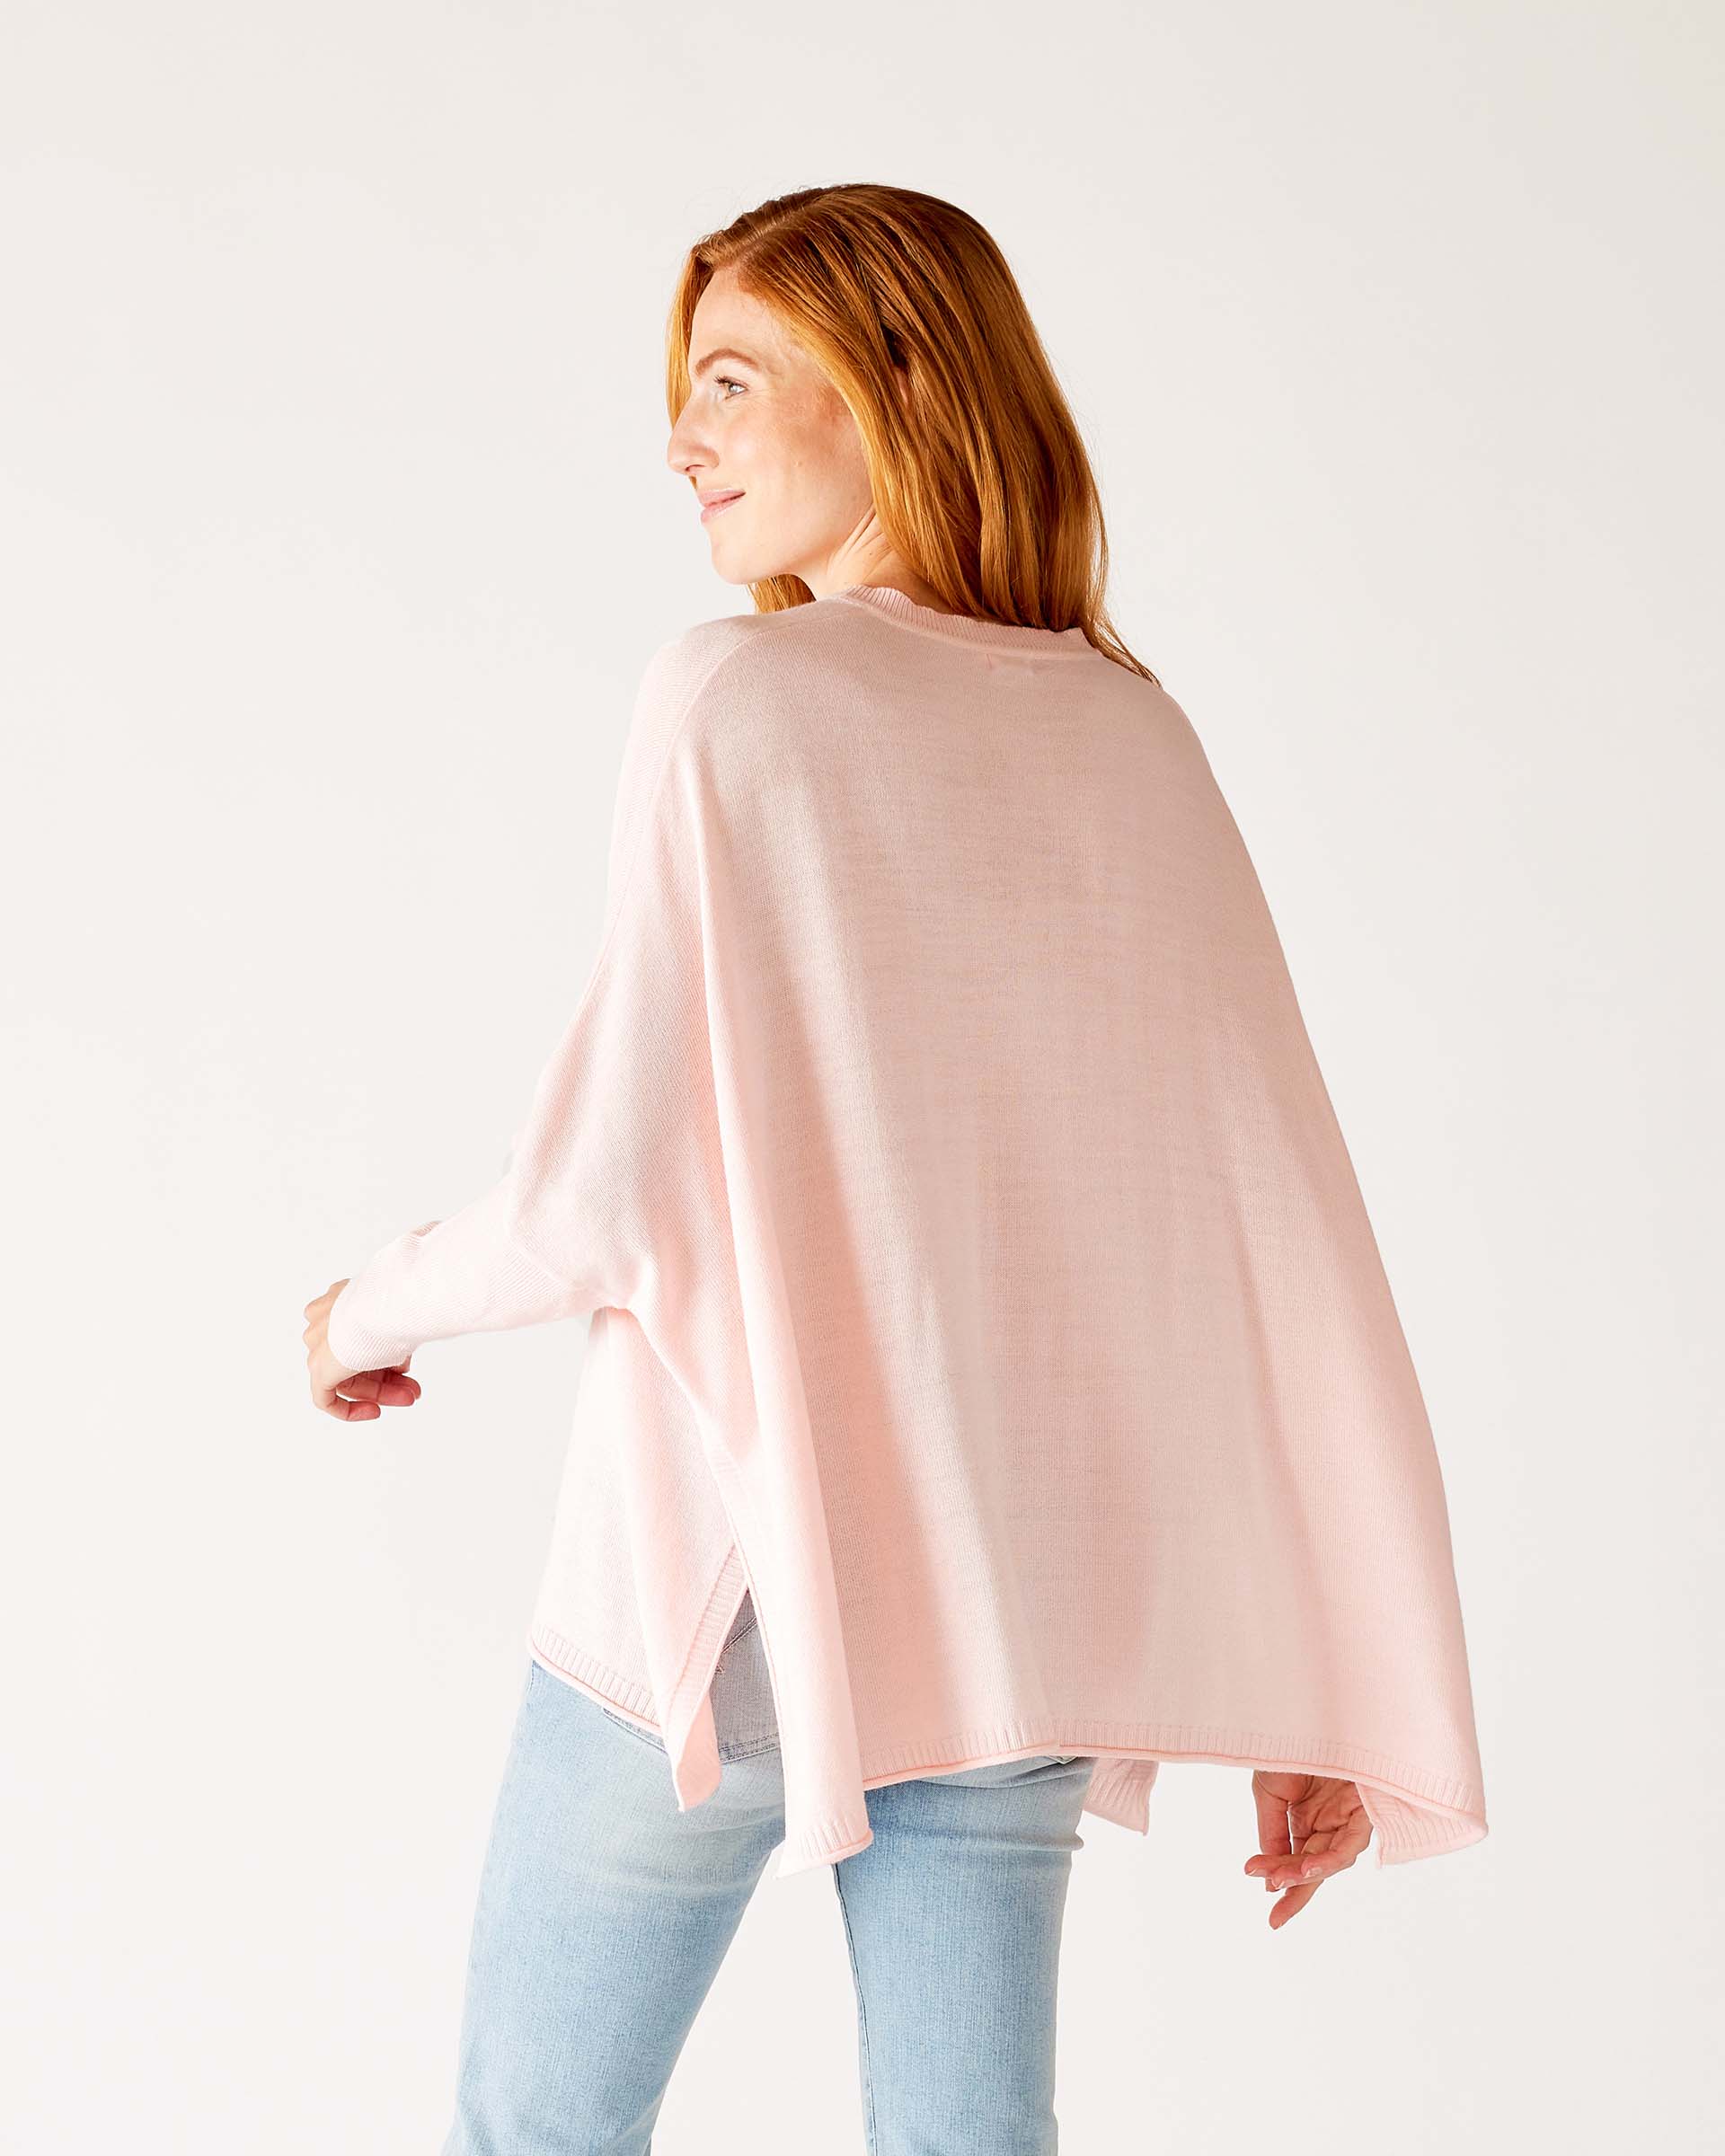 Women's One Size Vneck Knit Sweater in Light Pink Back View Drape